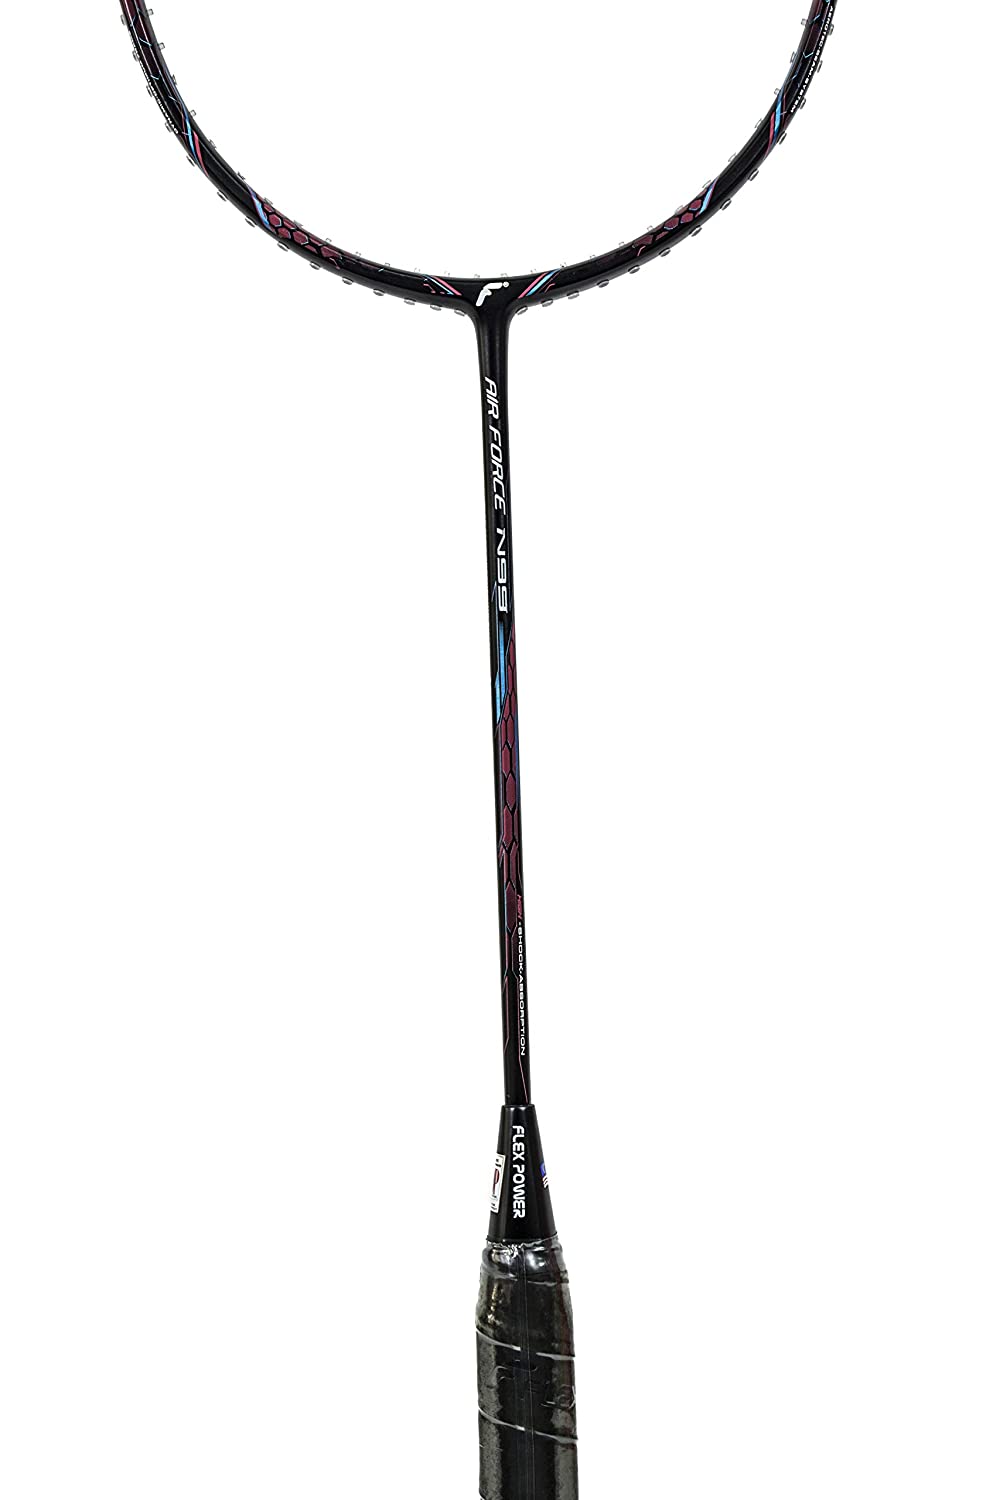 Flex Power Air Force 90 Badminton Racket